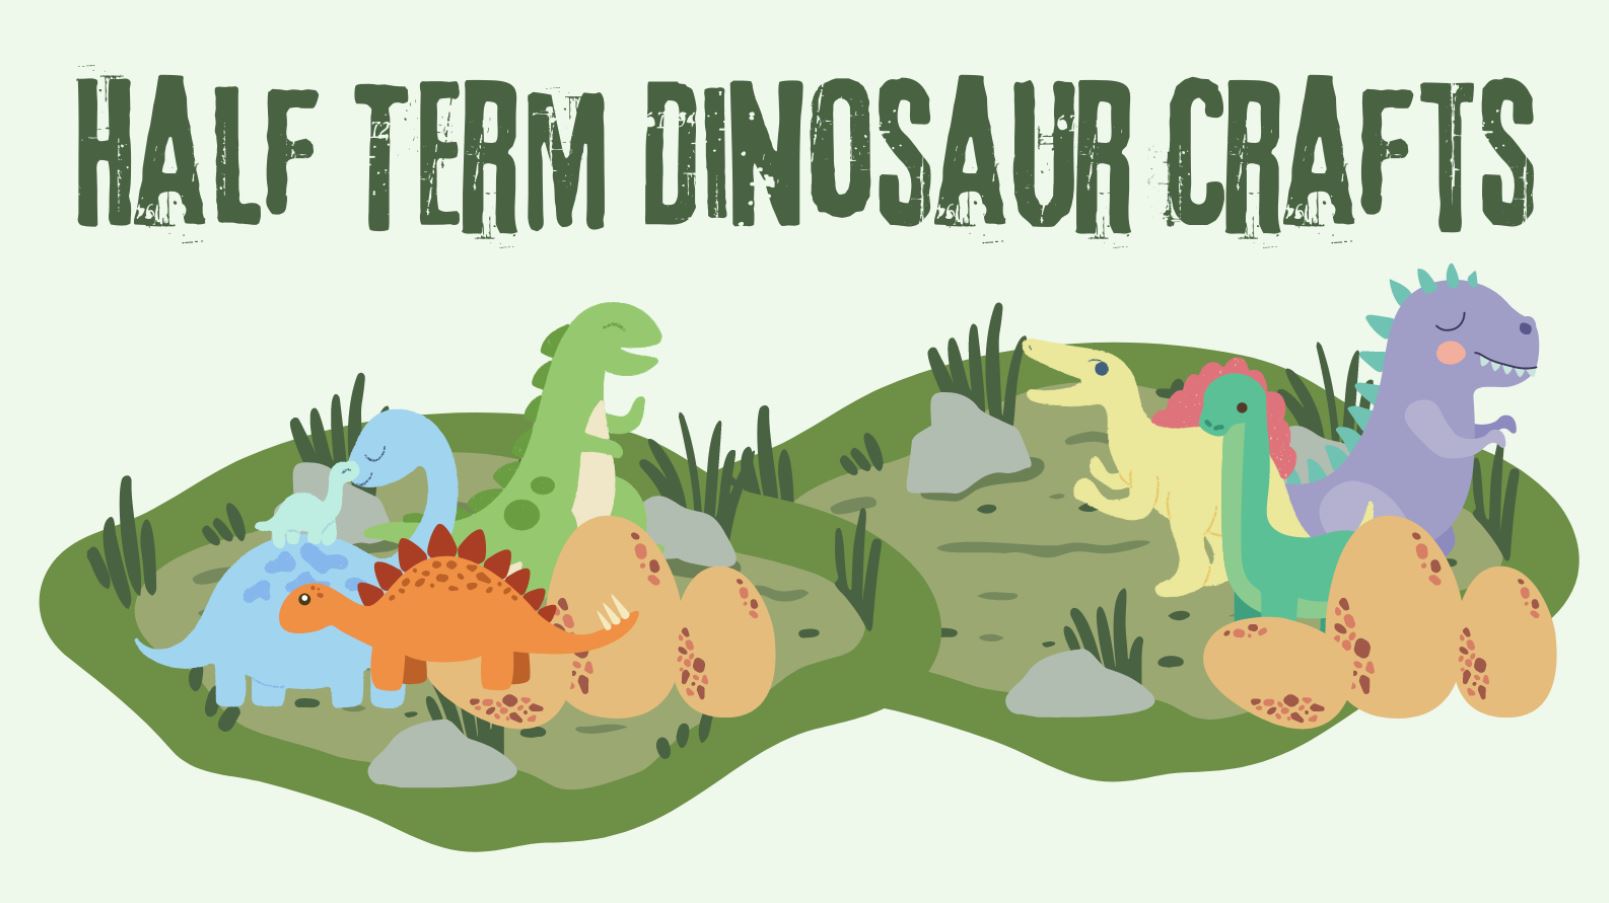 Half Term dinosaur crafts in green font above cartoon dinosaurs roaming a green landscape